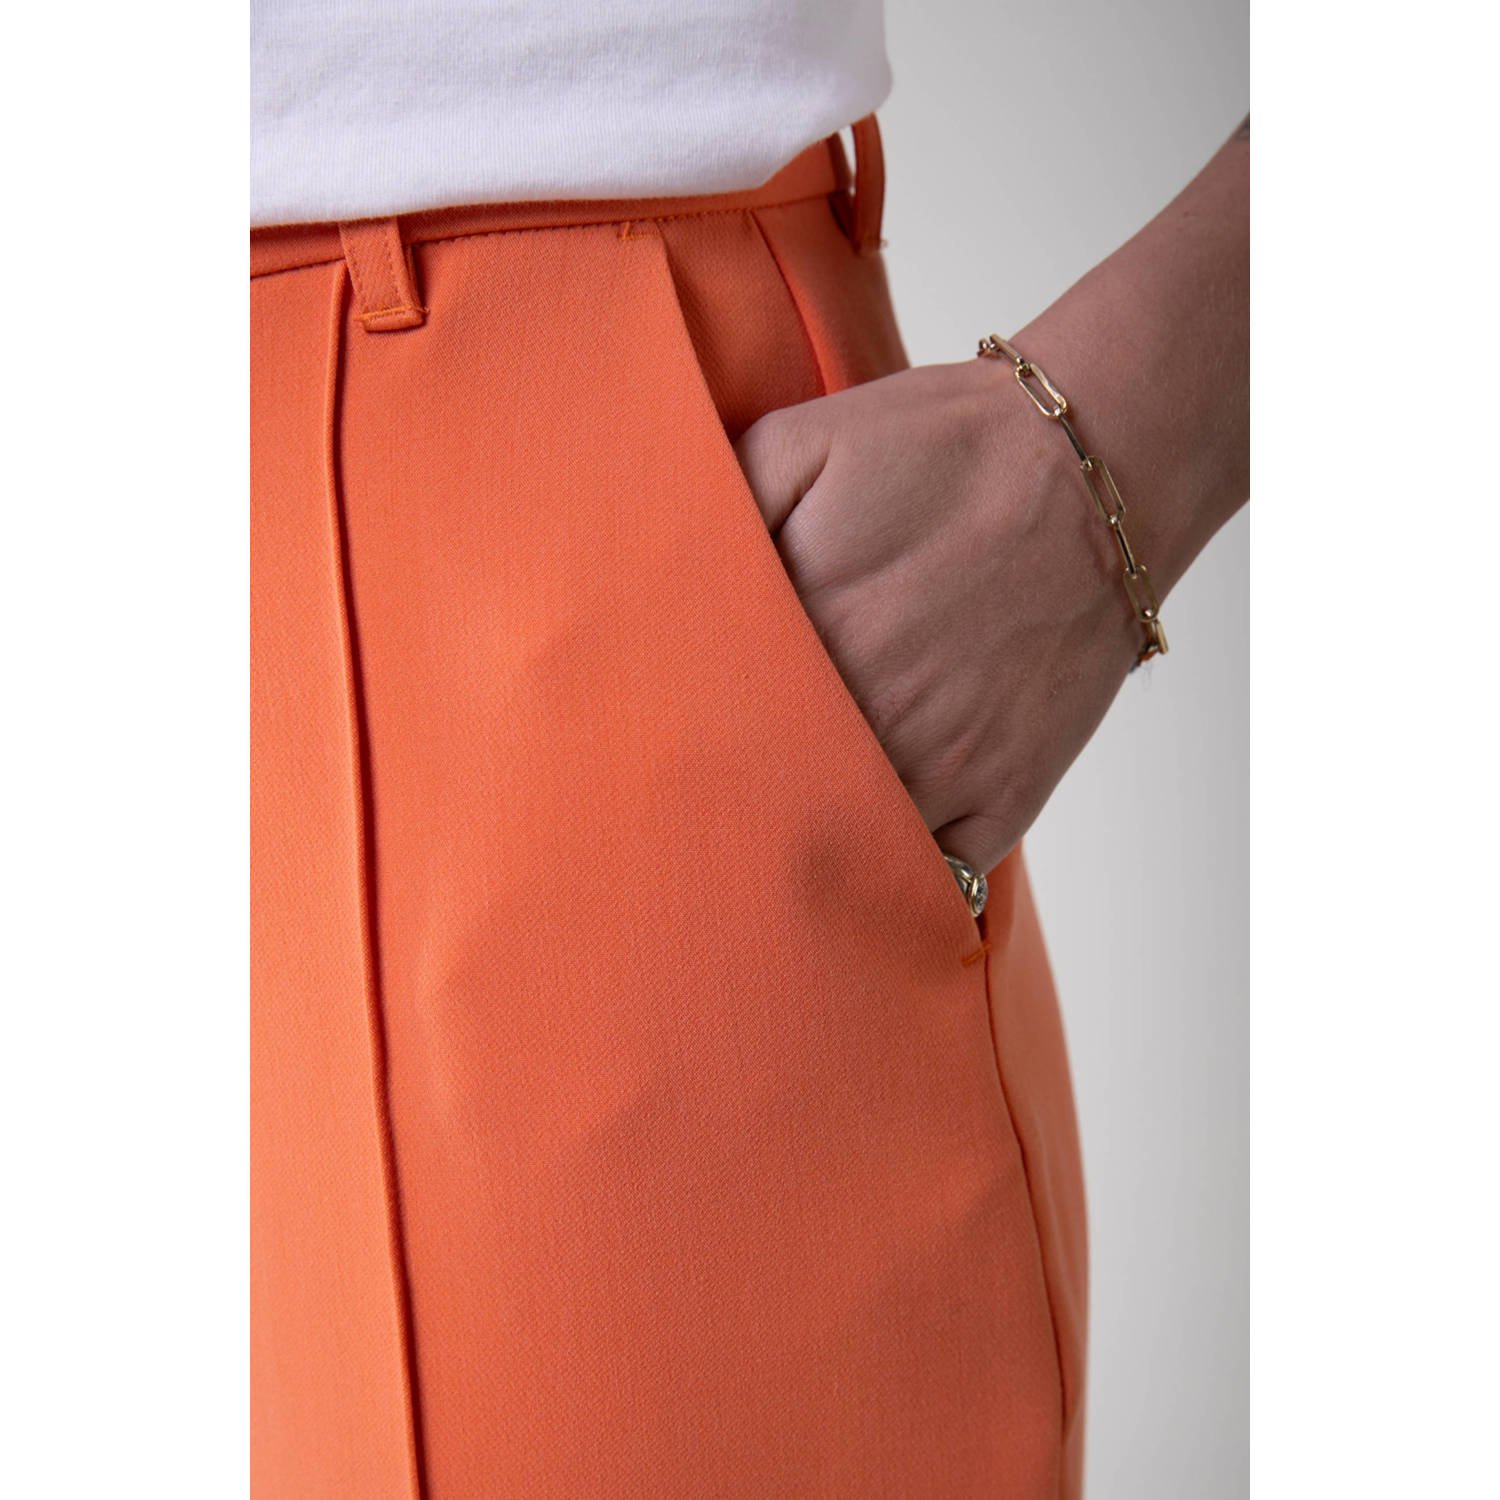 Colourful Rebel high waist straight fit pantalon Rus oranje